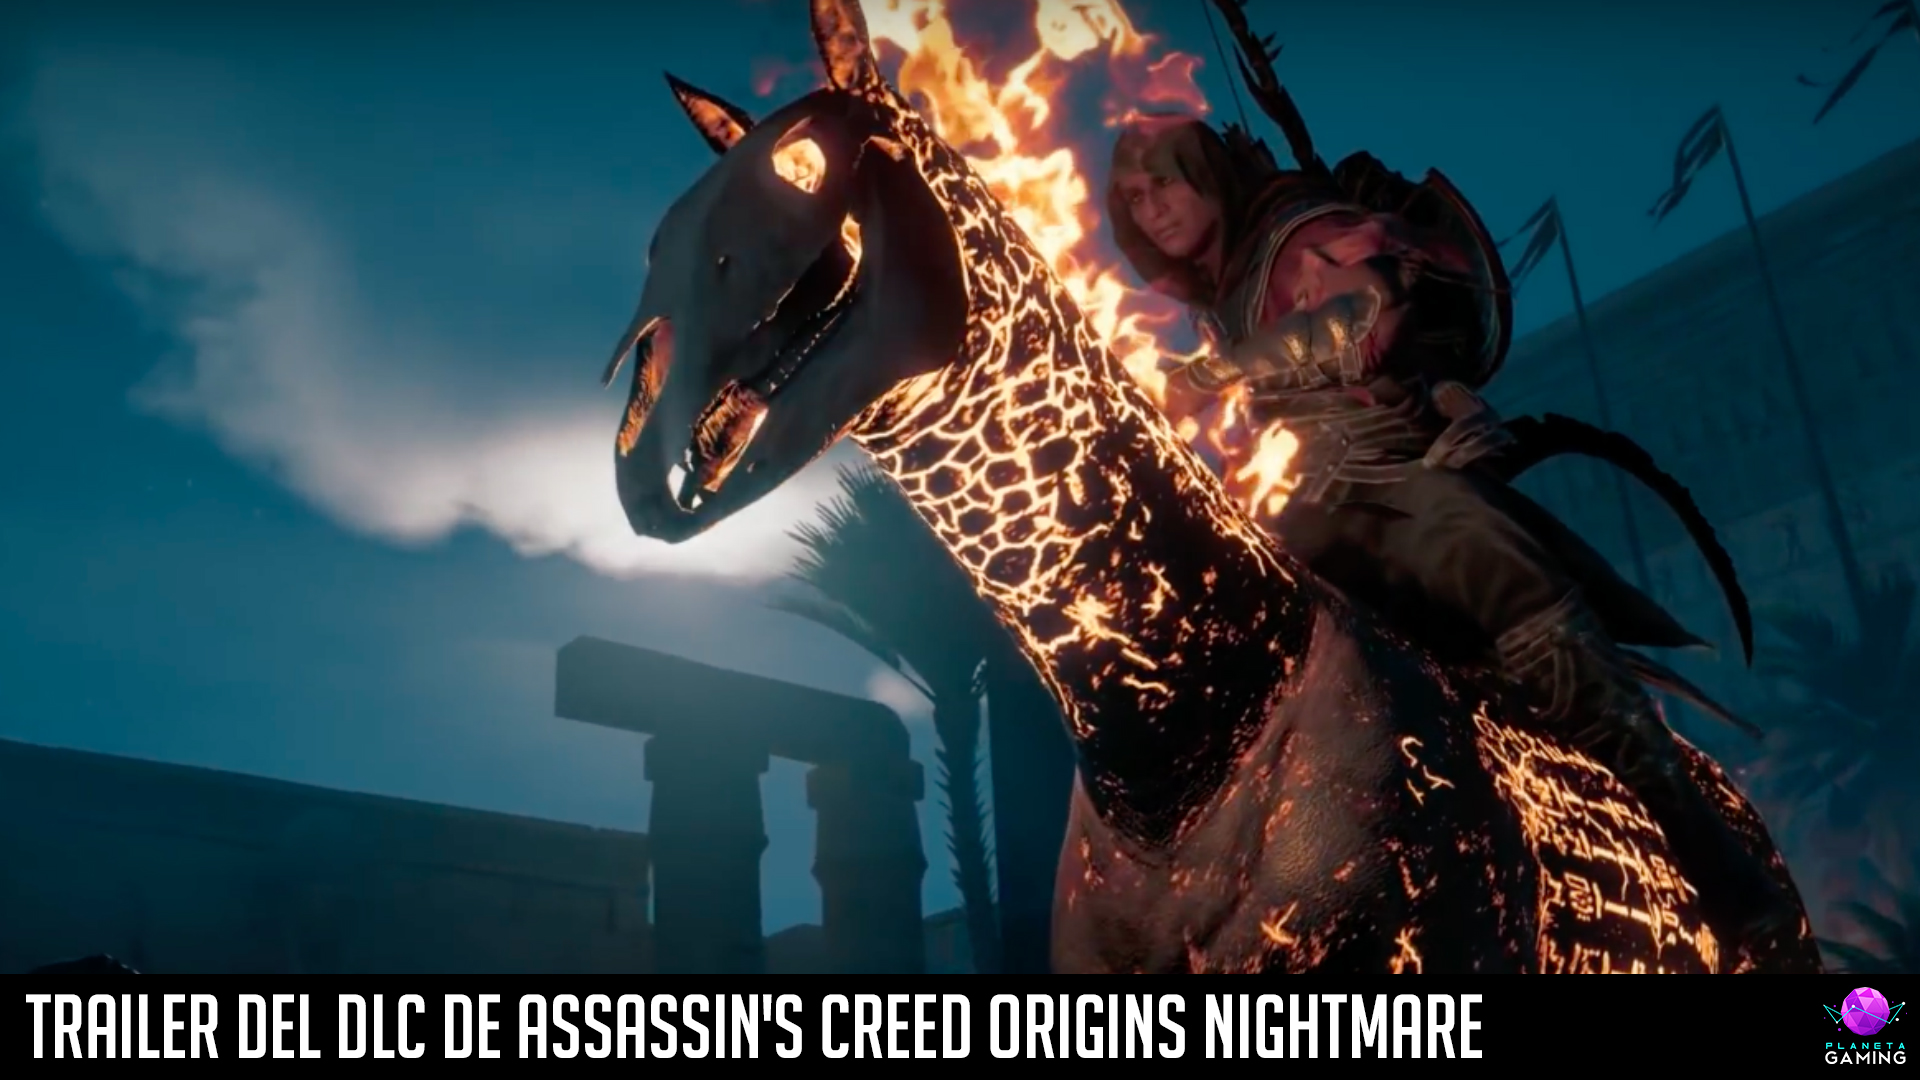 Trailer del DLC de Assassin’s Creed Origins Nightmare